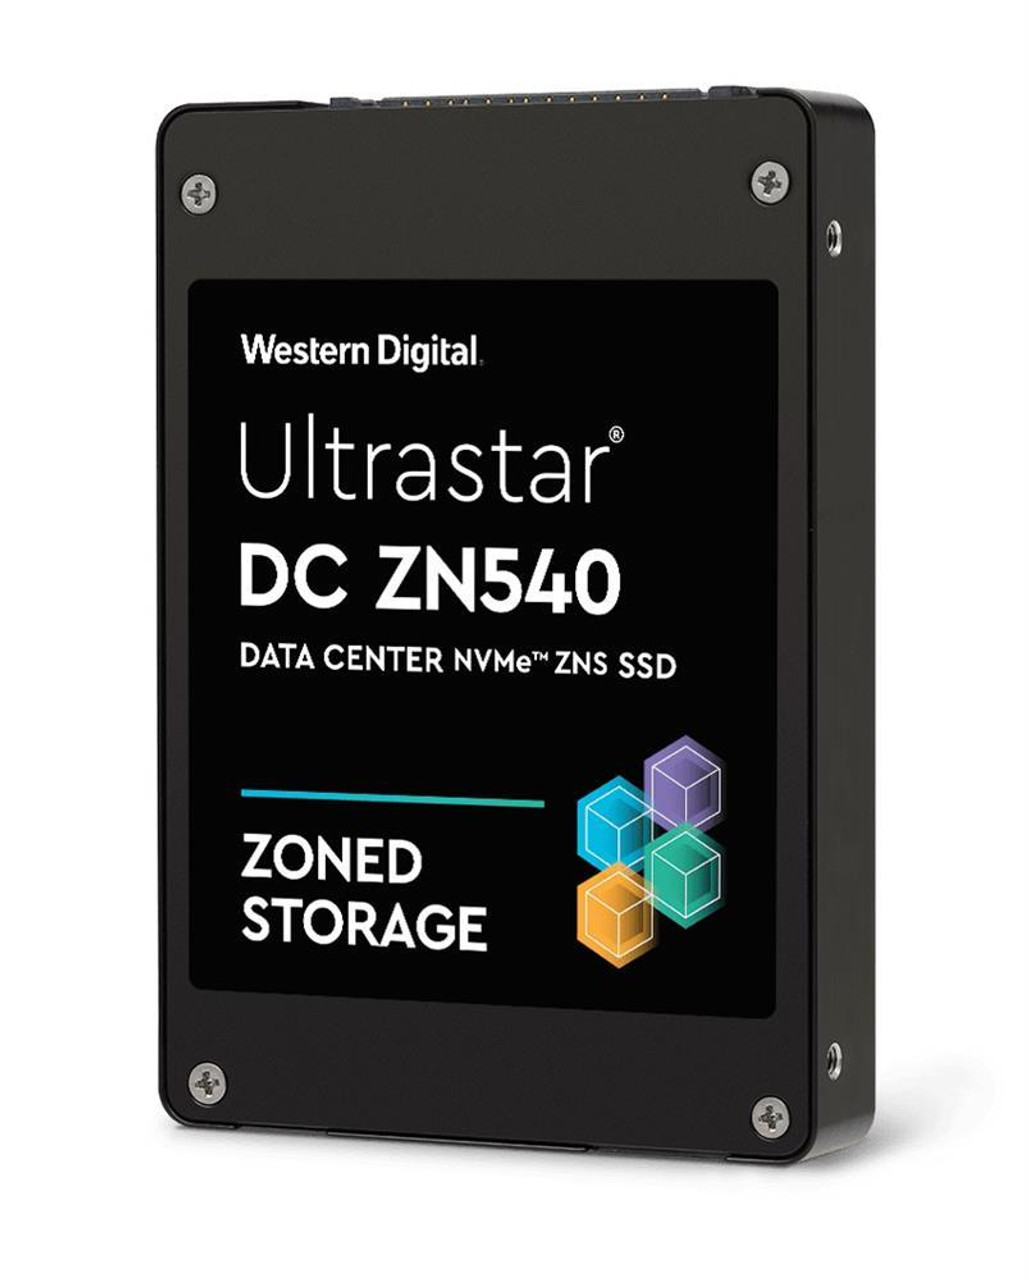 Western Digital Ultrastar DC HC550 18 TB Hard Drive - 3.5